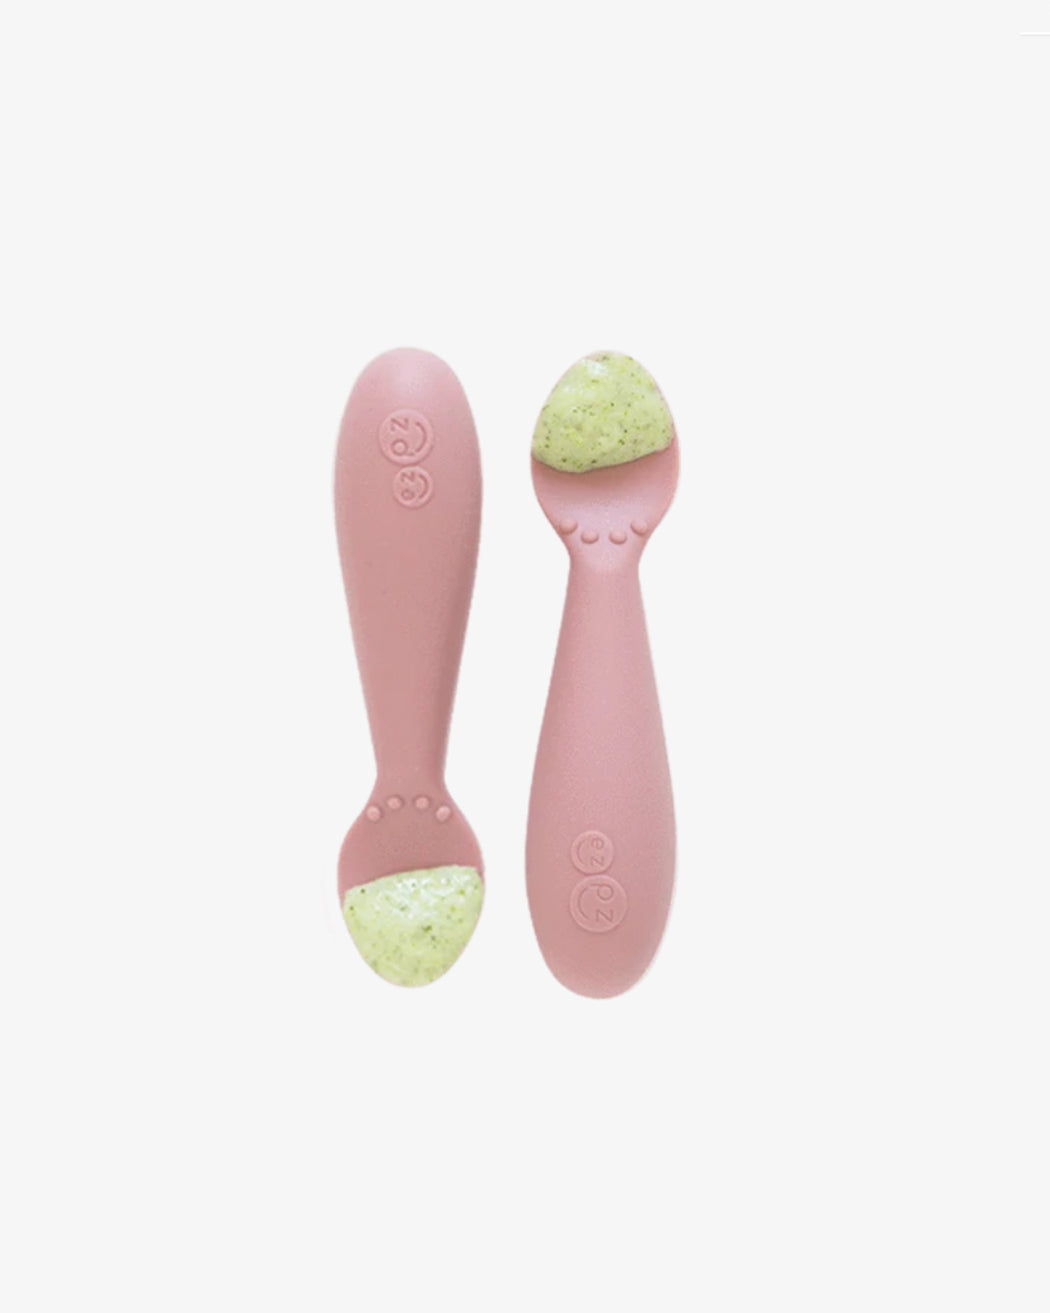 Tiny Spoon 2-Pack – Blush